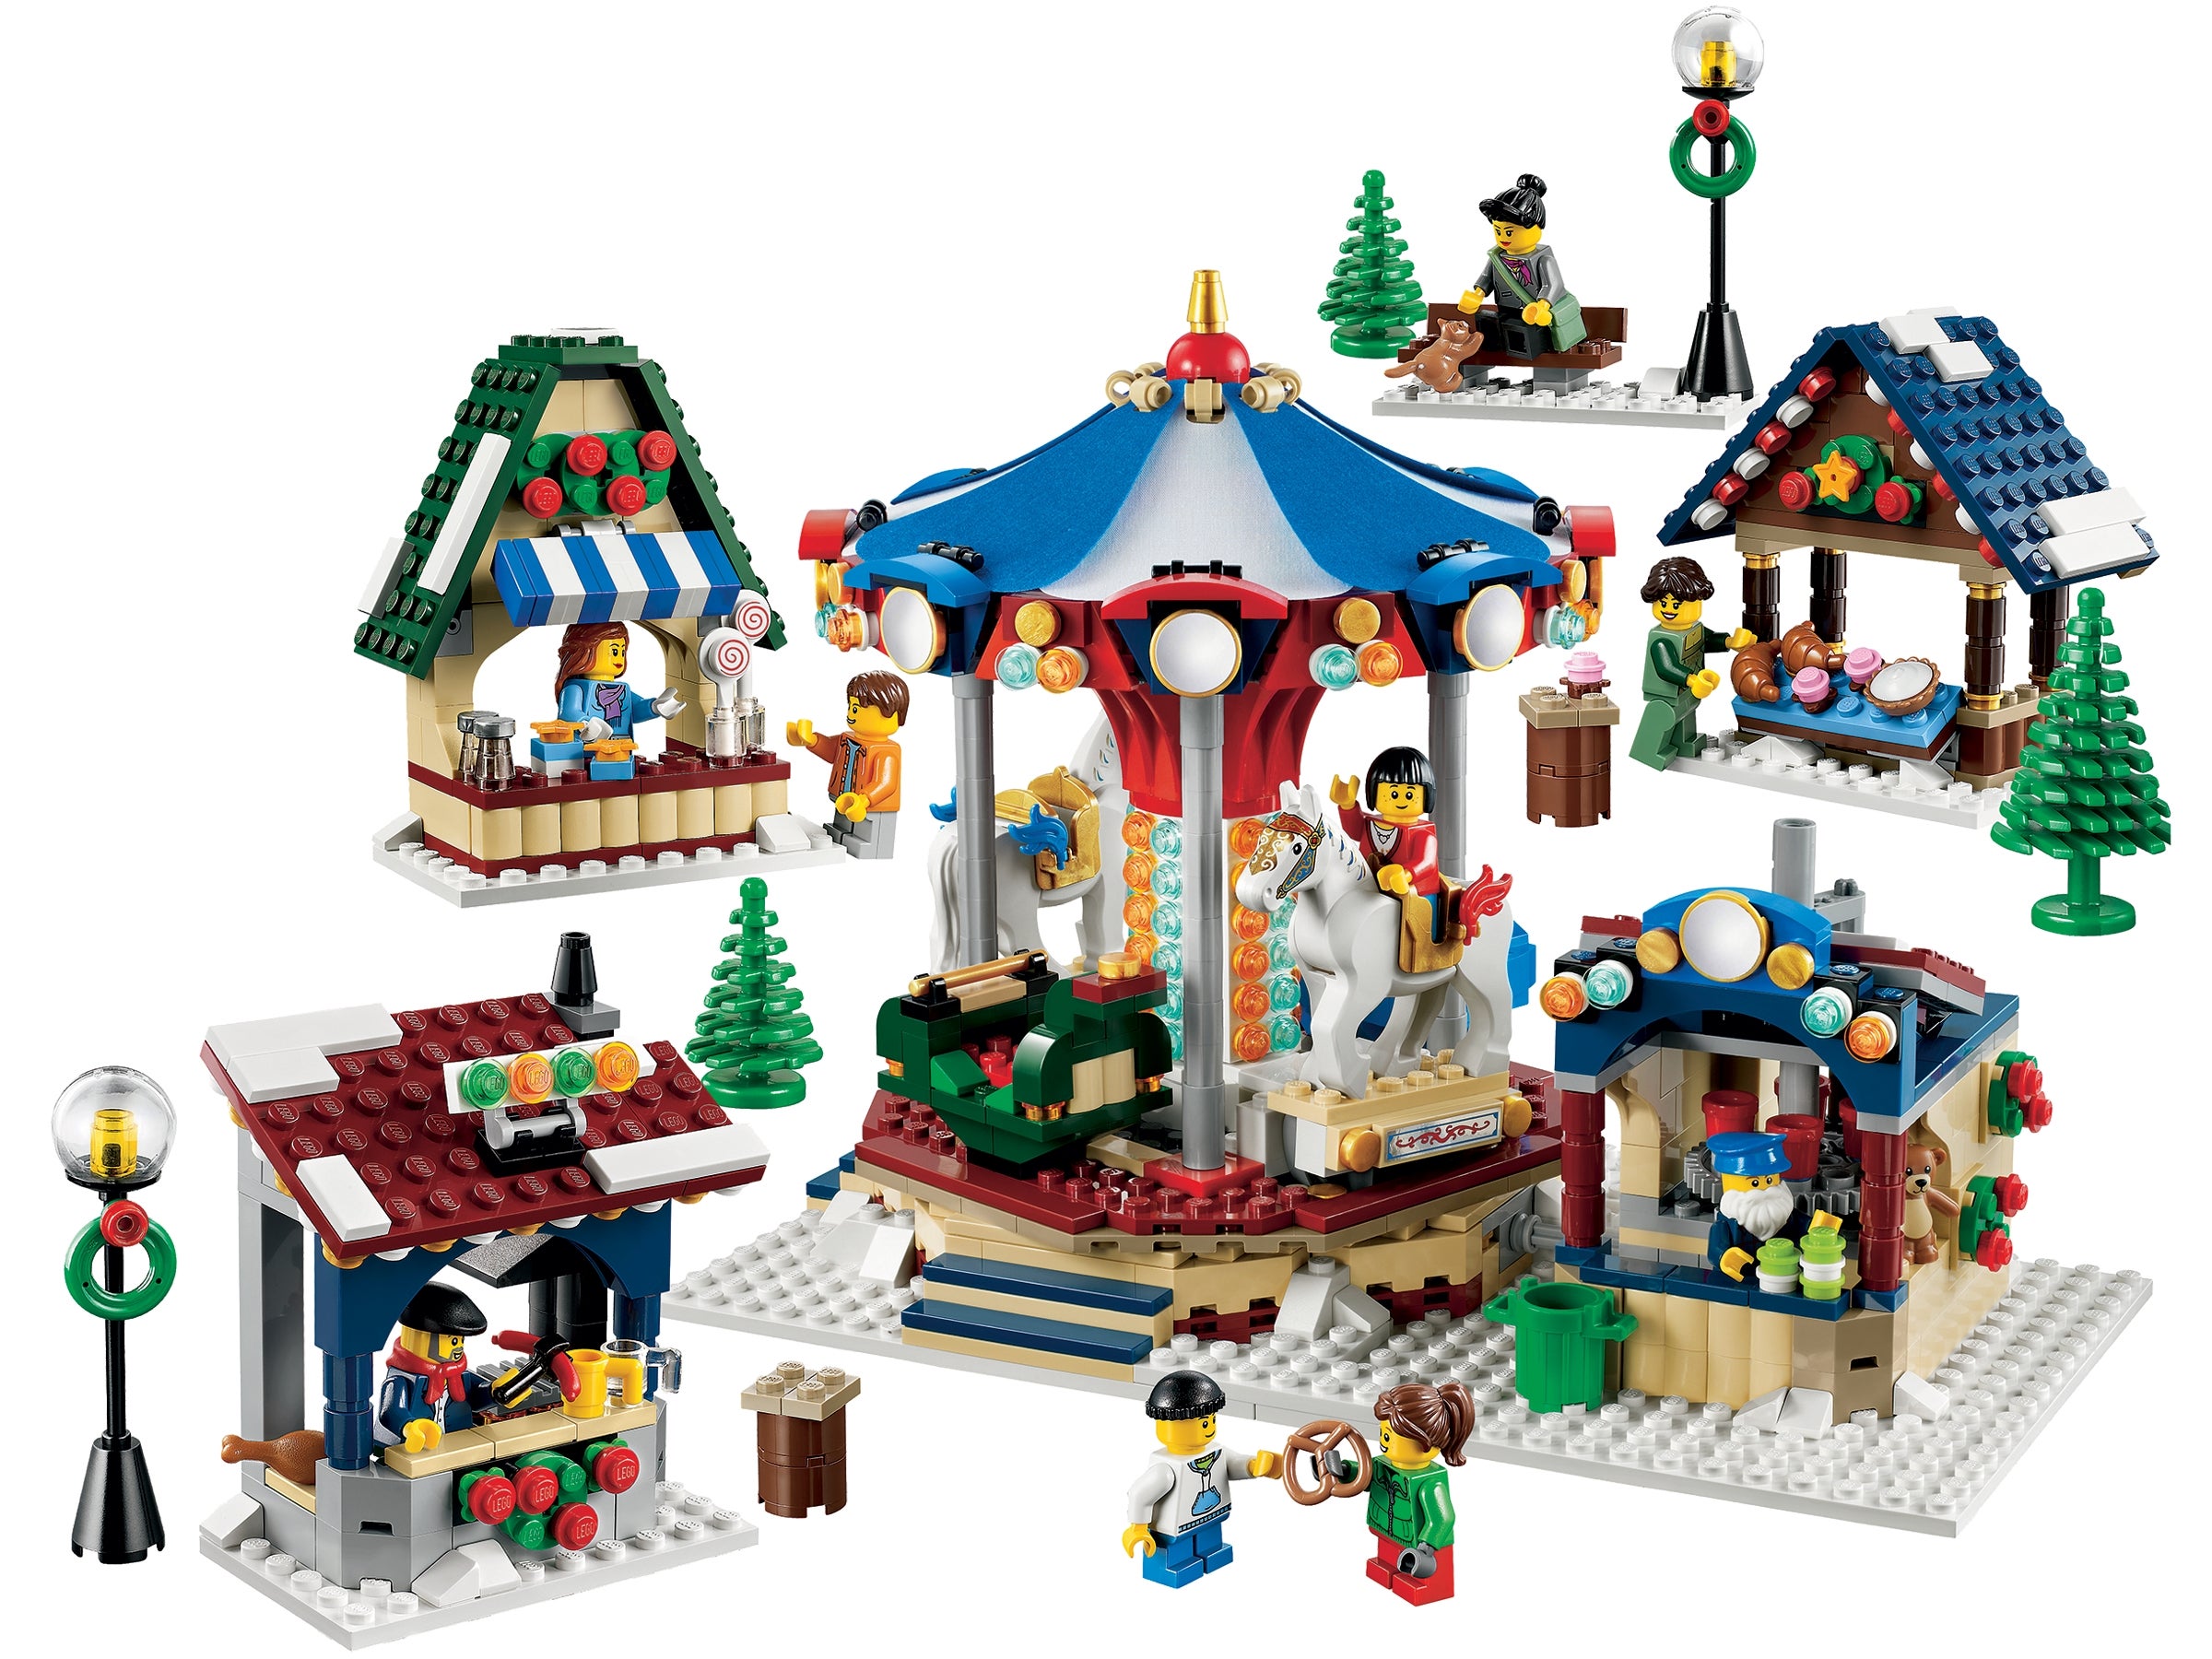 Sealed LEGO Creator 10235 Winter Village Market 1261 pcz NEW Free shipping RARE